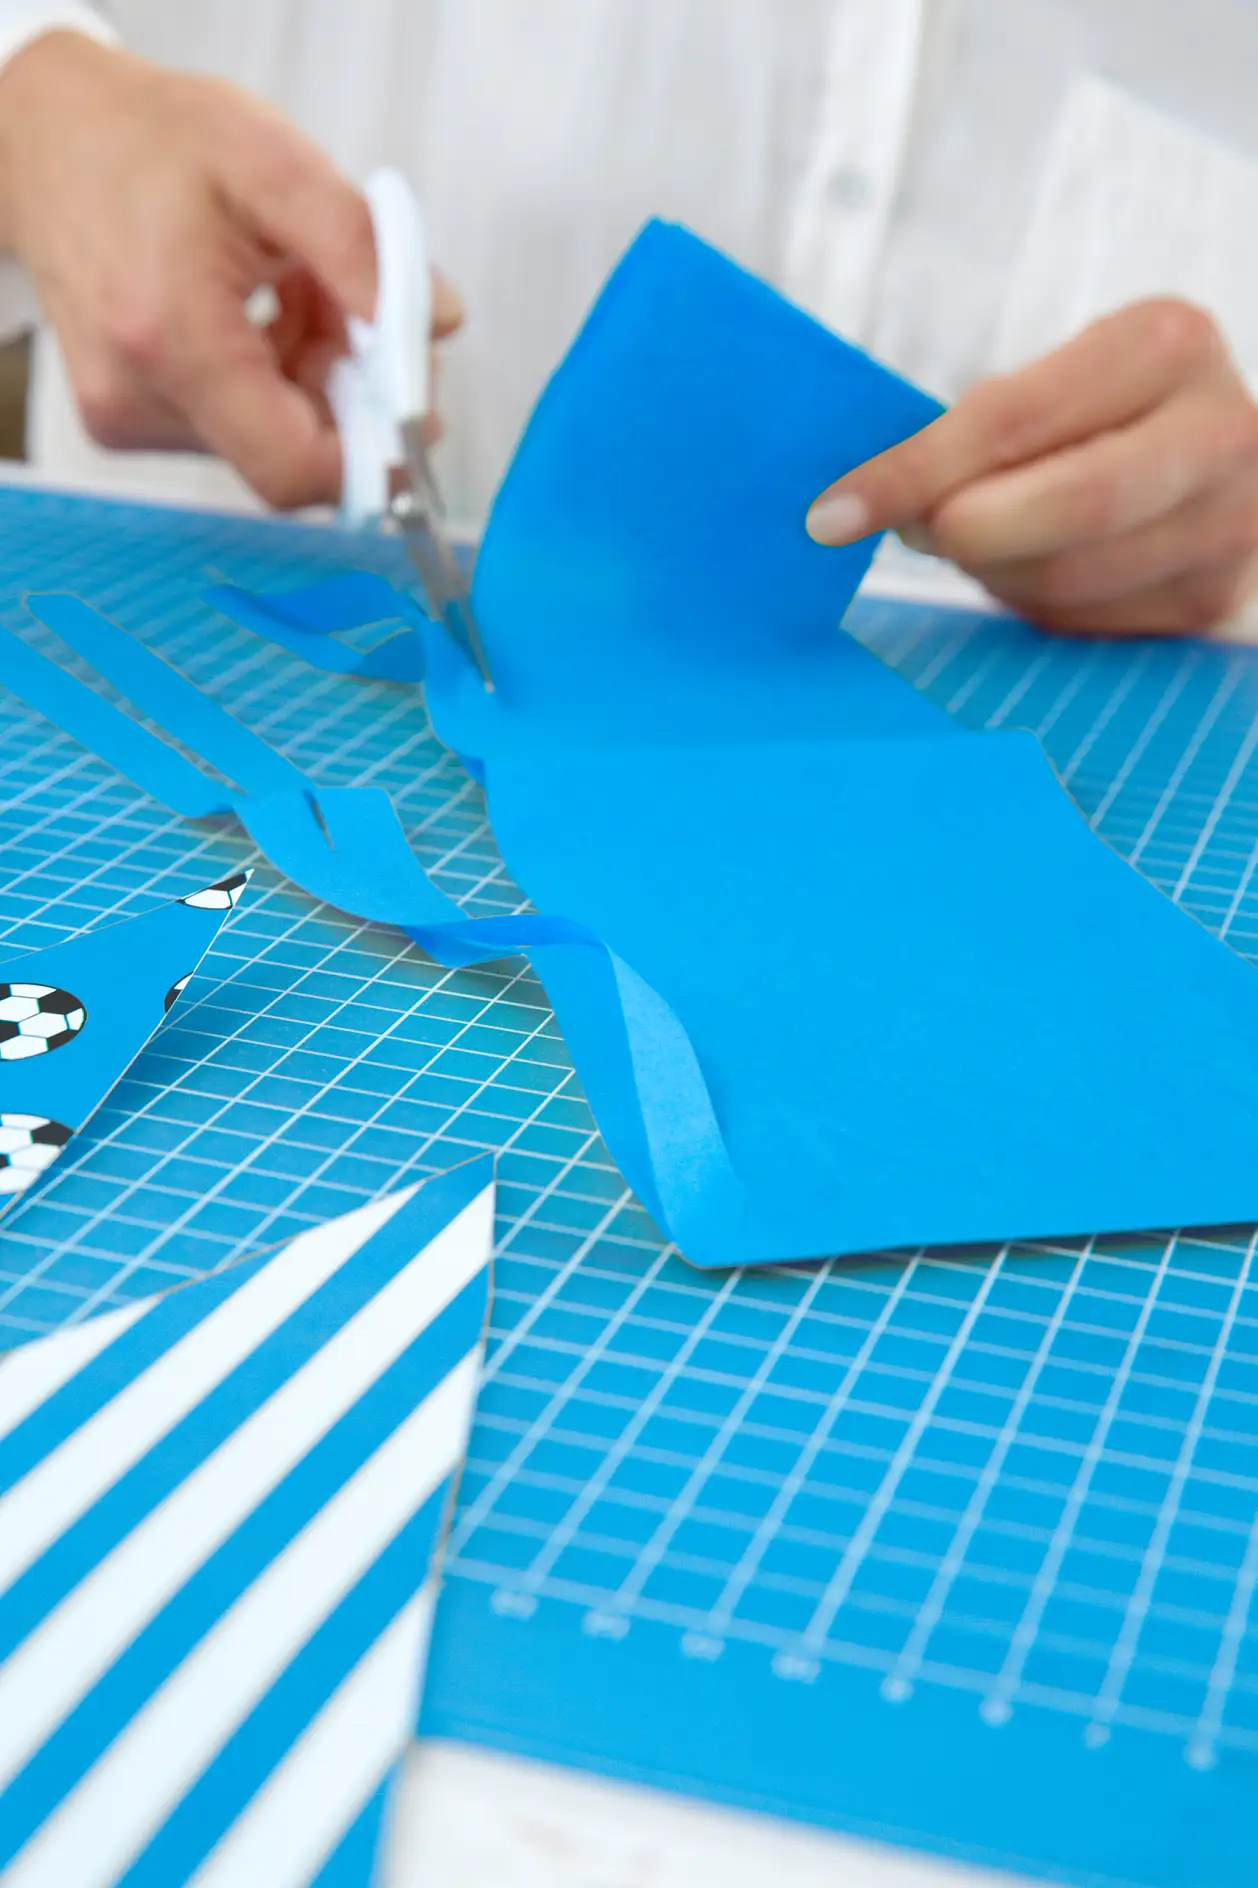 DIY Γιρλάντα Ποδοσφαίρου / Βήμα 3ο: Κόψτε λωρίδες χαρτιού